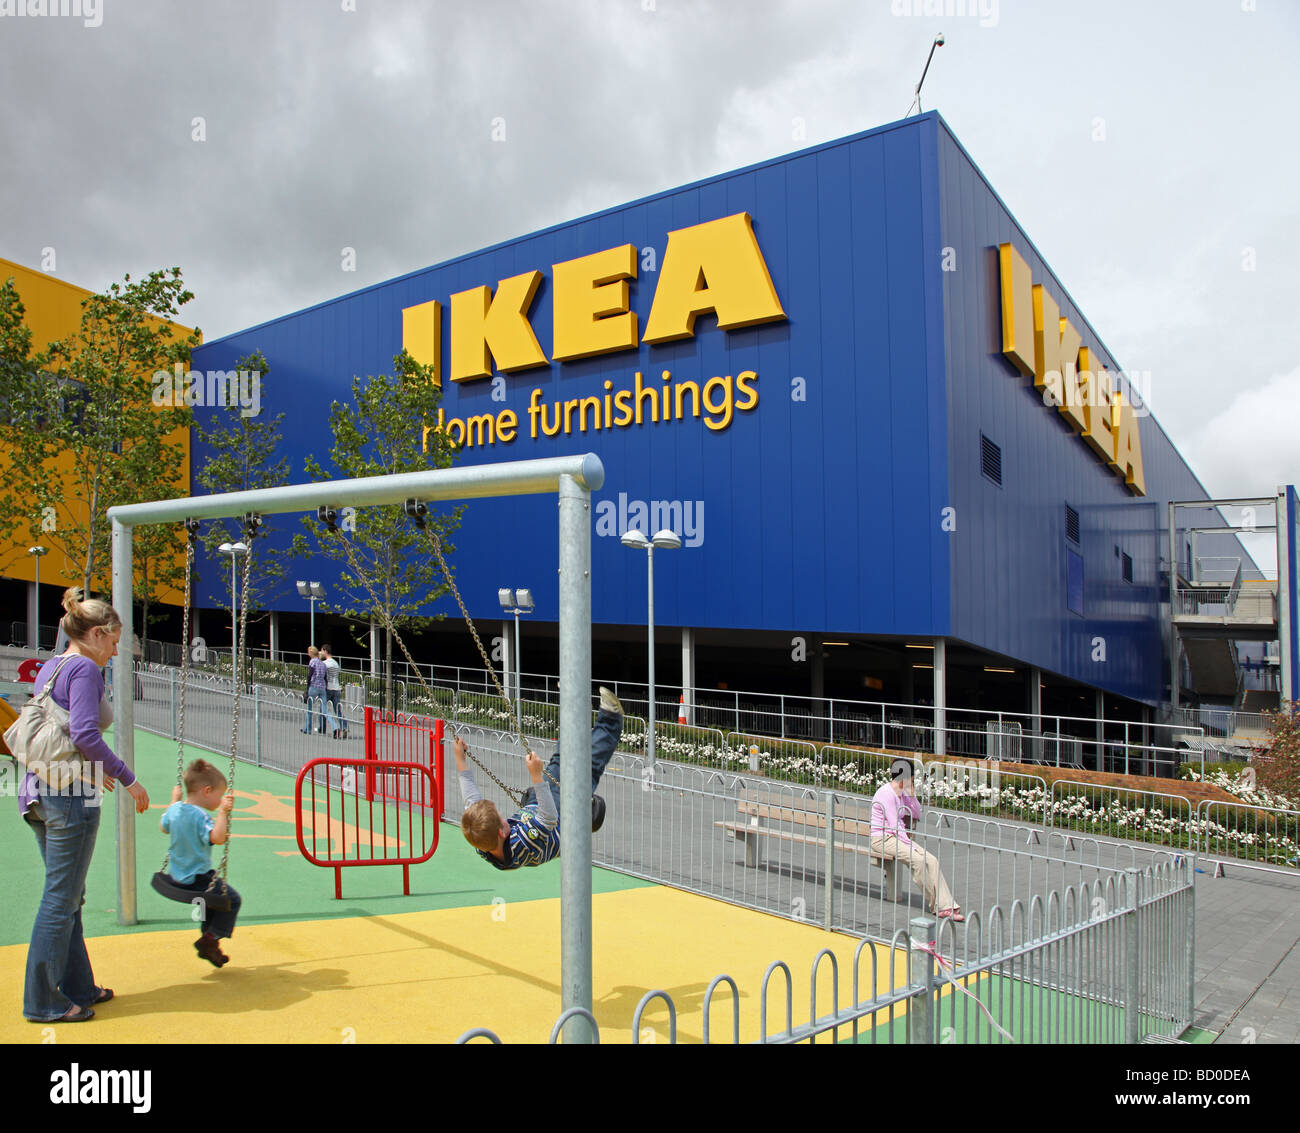 IKEA Ballymun Dublin Republicof Ireland Stock Photo